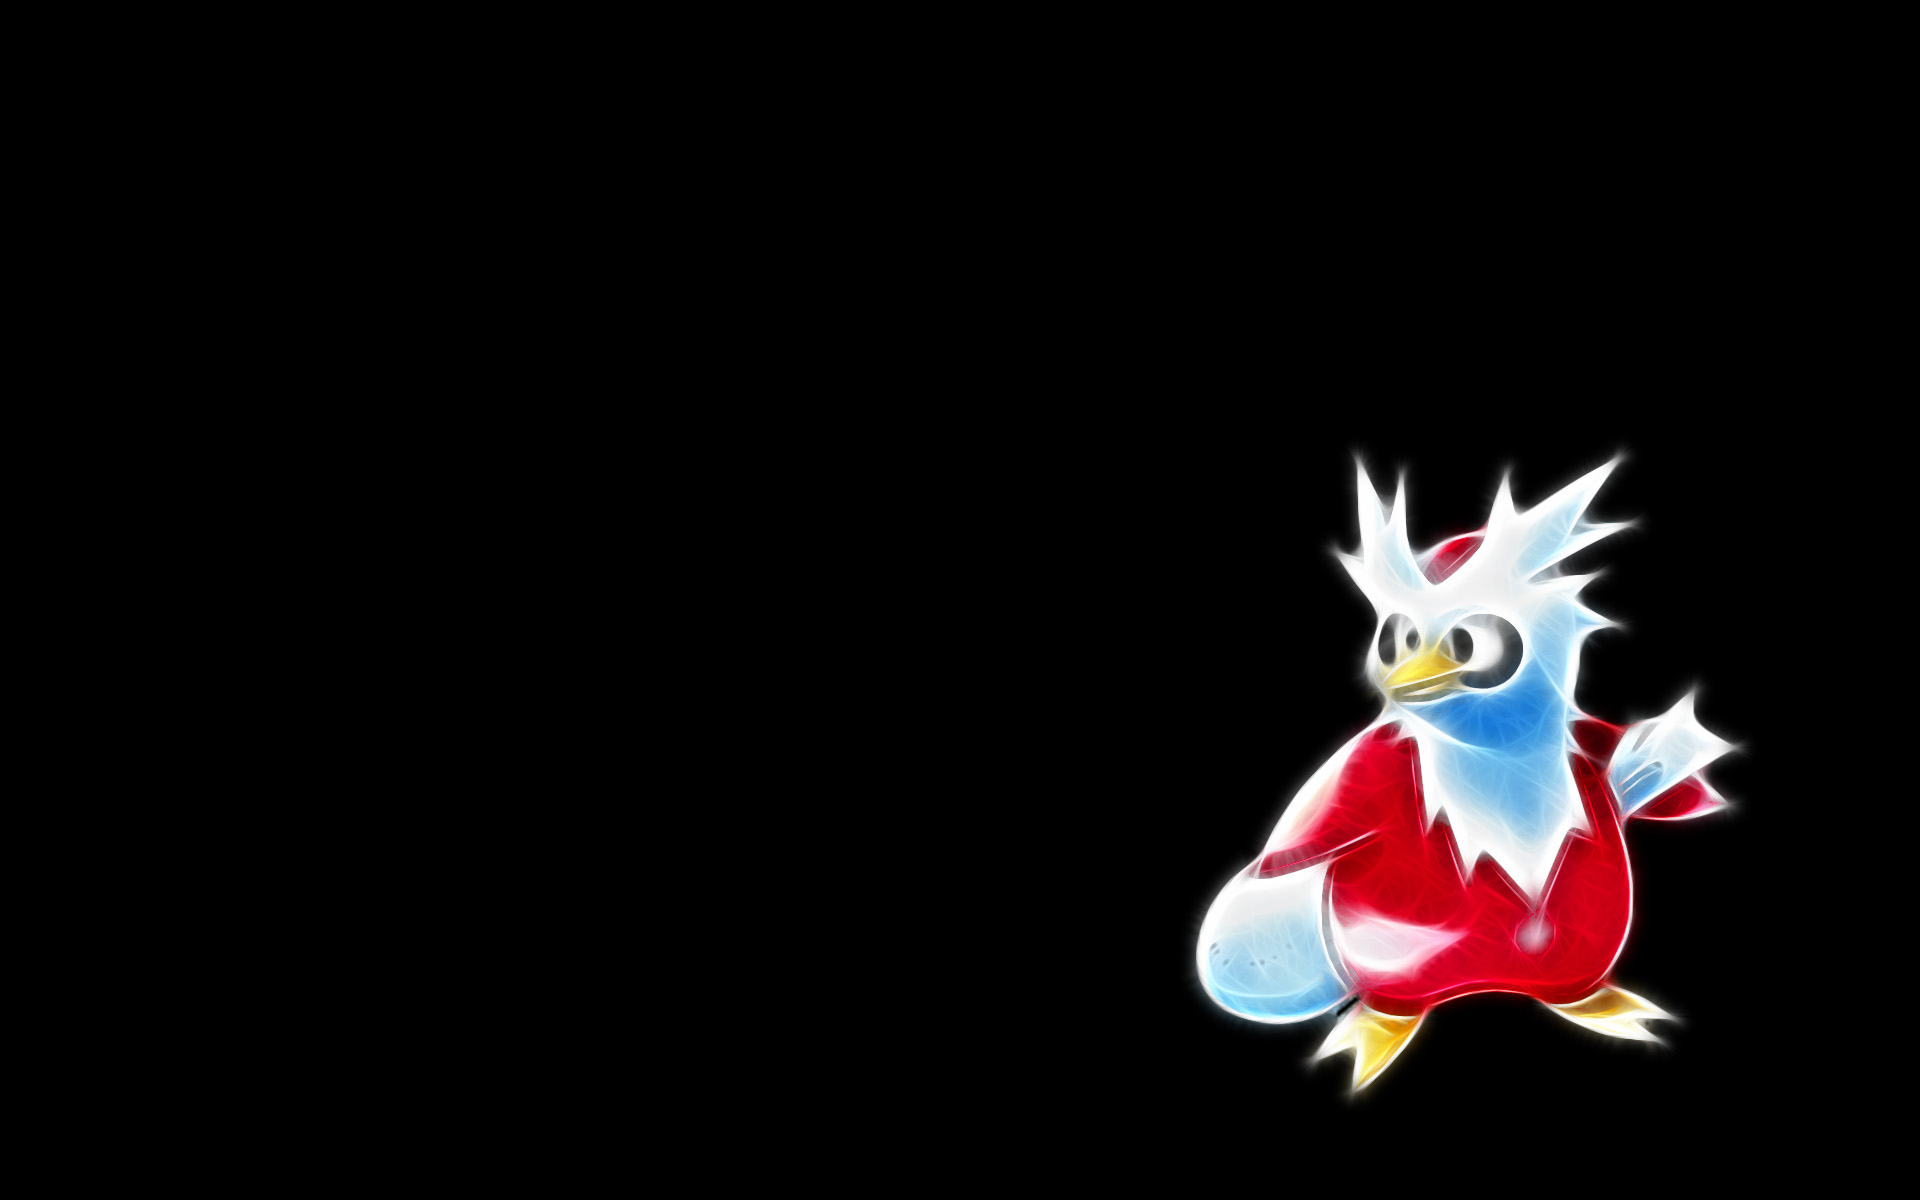 177835 descargar imagen animado, pokémon, delibird (pokémon), pokémon volador, pokémon de hielo: fondos de pantalla y protectores de pantalla gratis